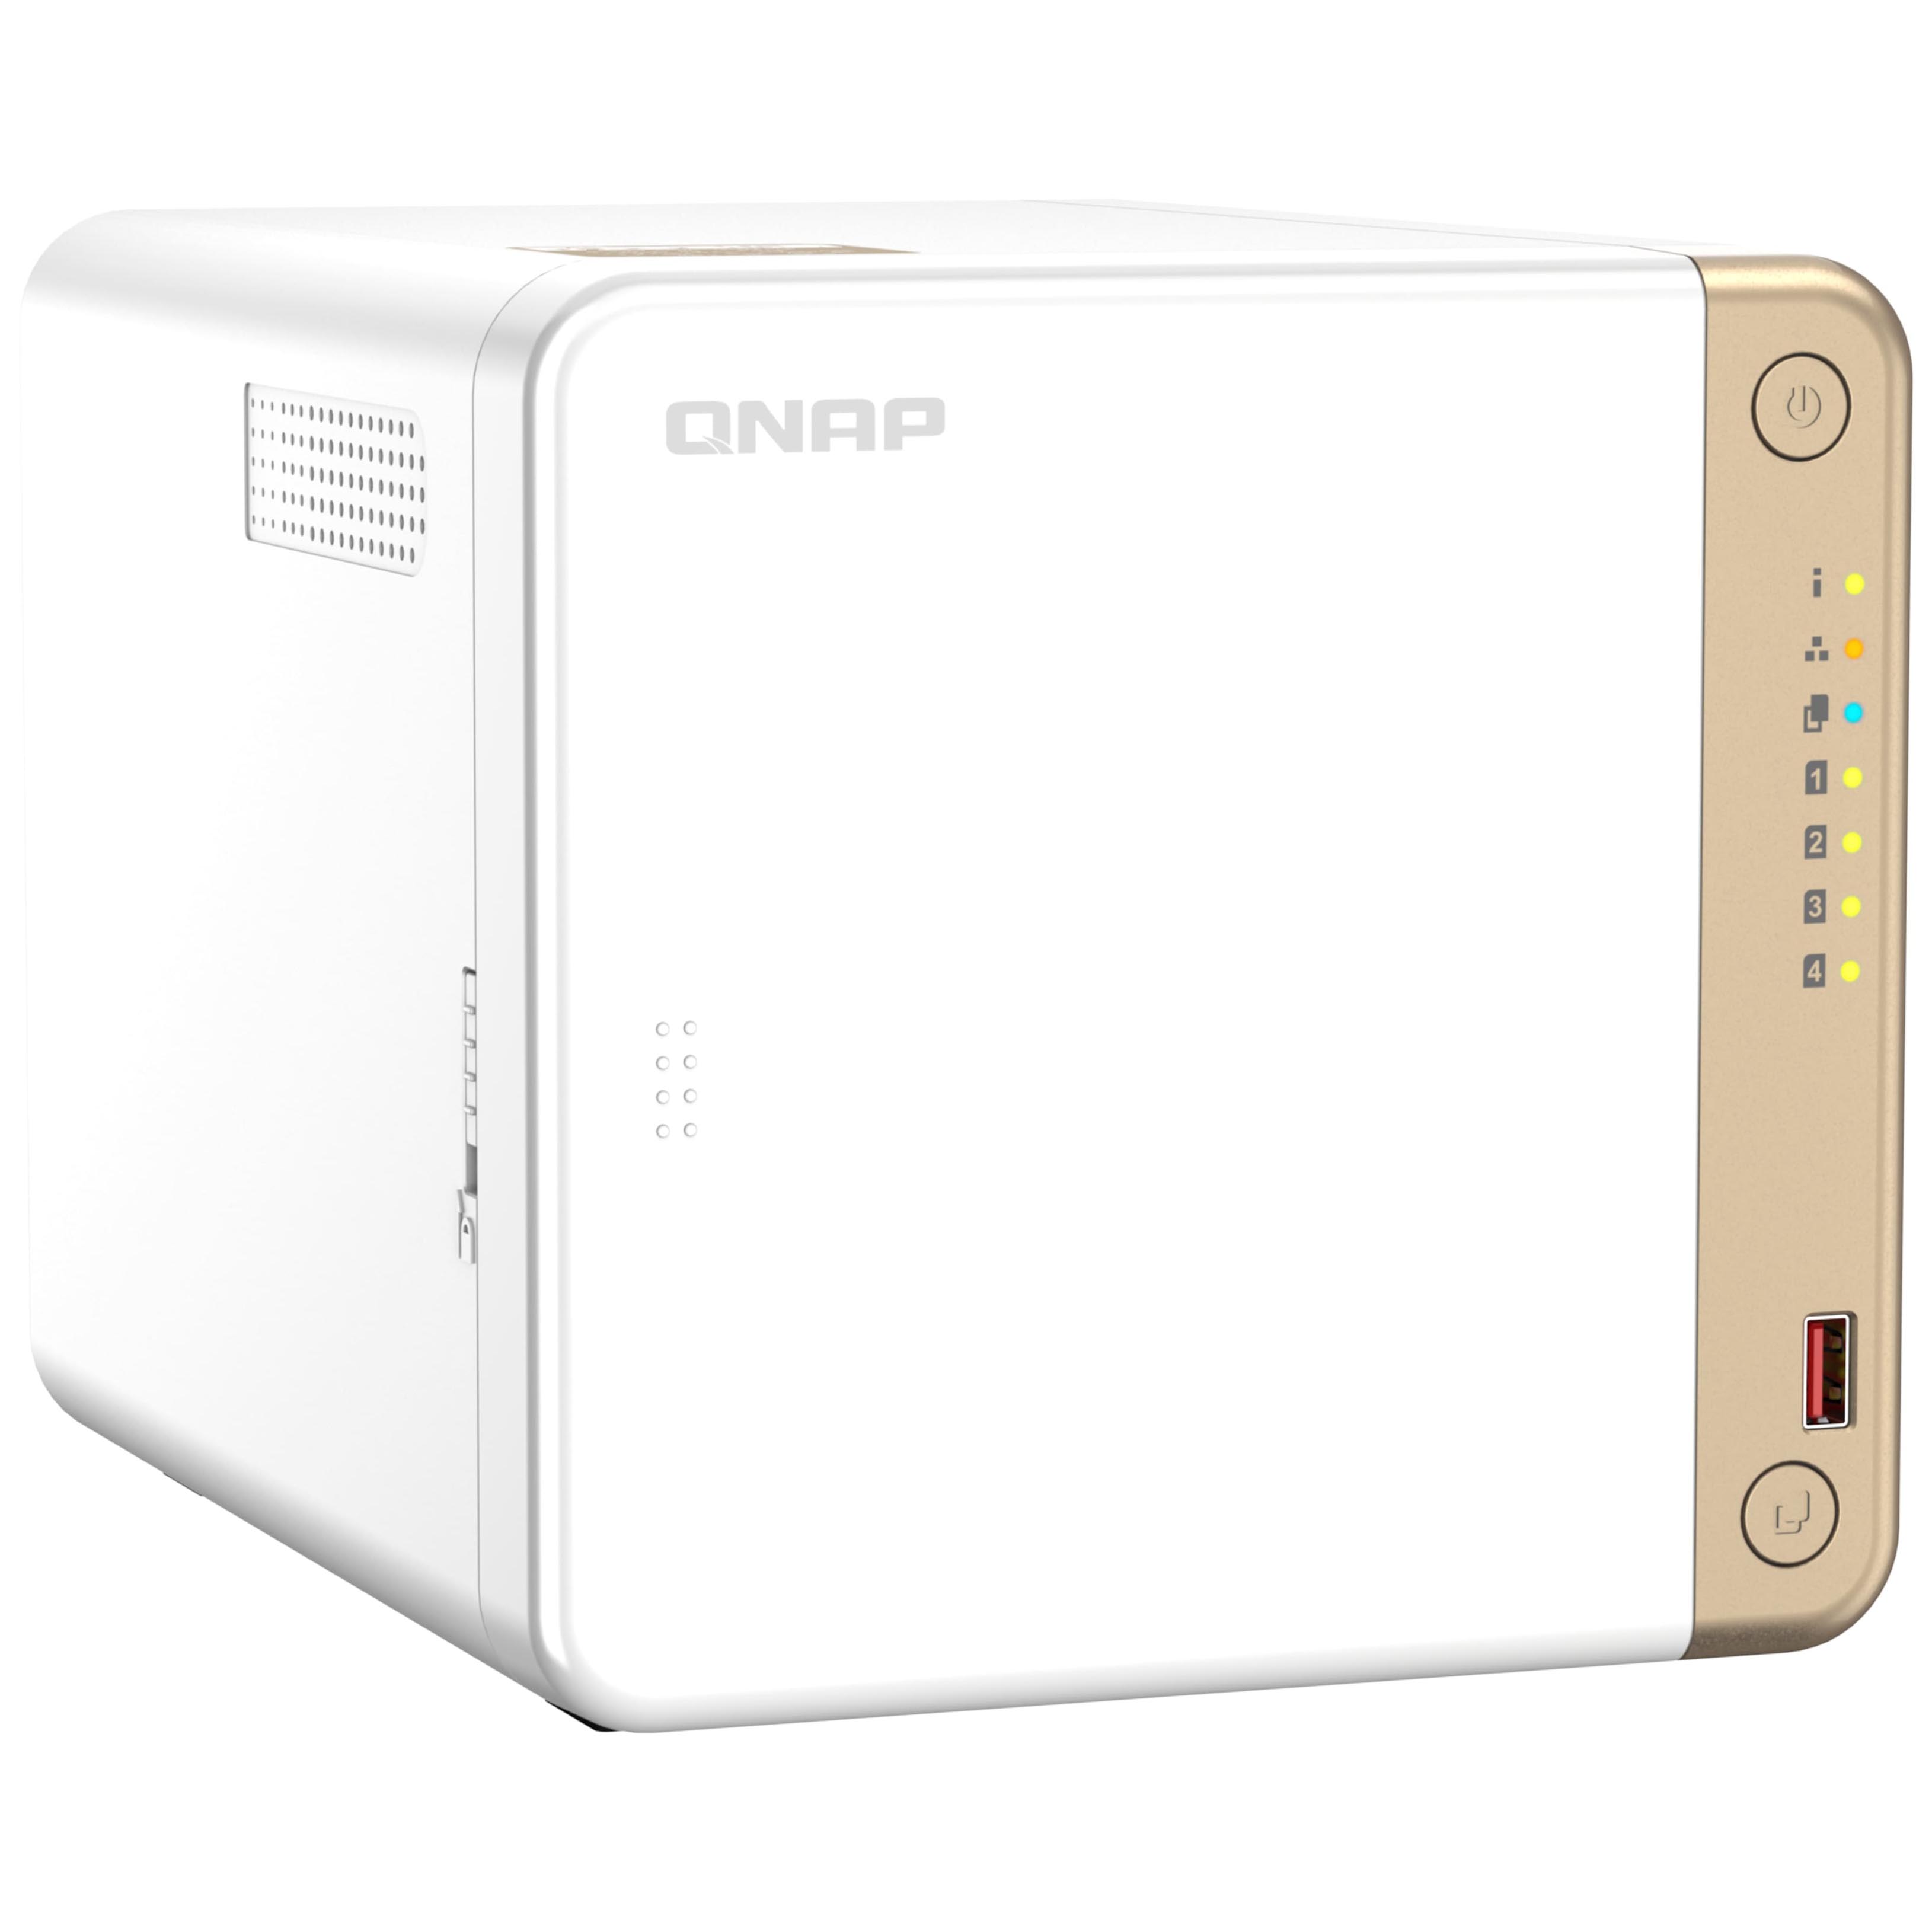 Сетевое хранилище QNAP TS-462 Nas, 4 отсека, без дисков, белый сетевое хранилище nas qnap d2 rev b